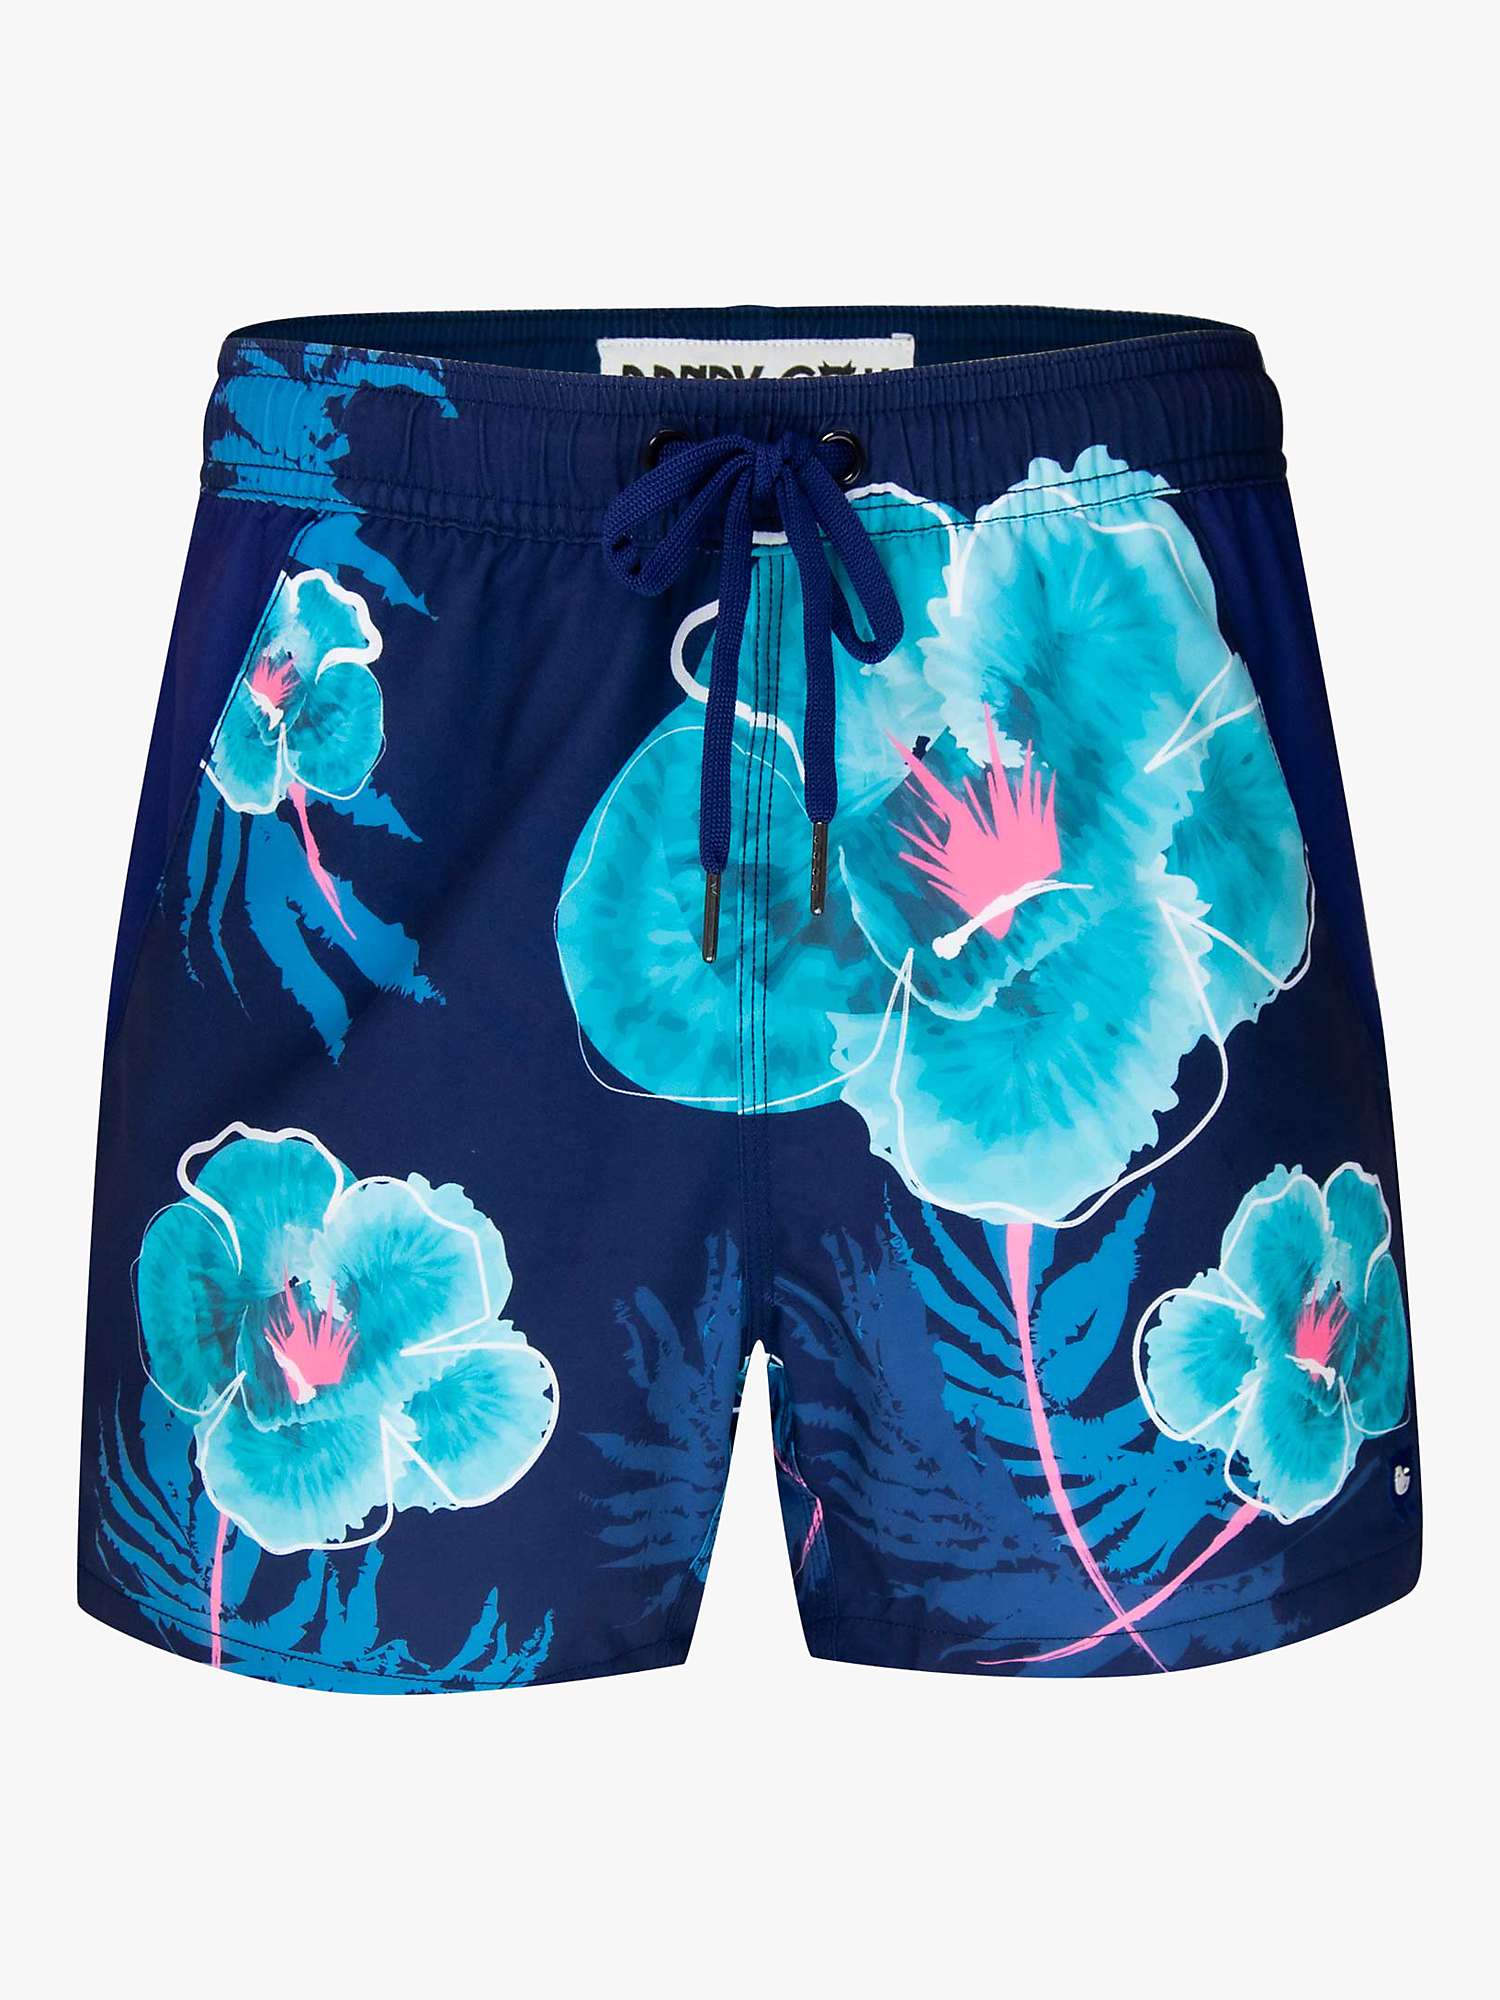 Buy Randy Cow Floral Print Swim Shorts with Waterproof Pocket, Navy/Multi Online at johnlewis.com